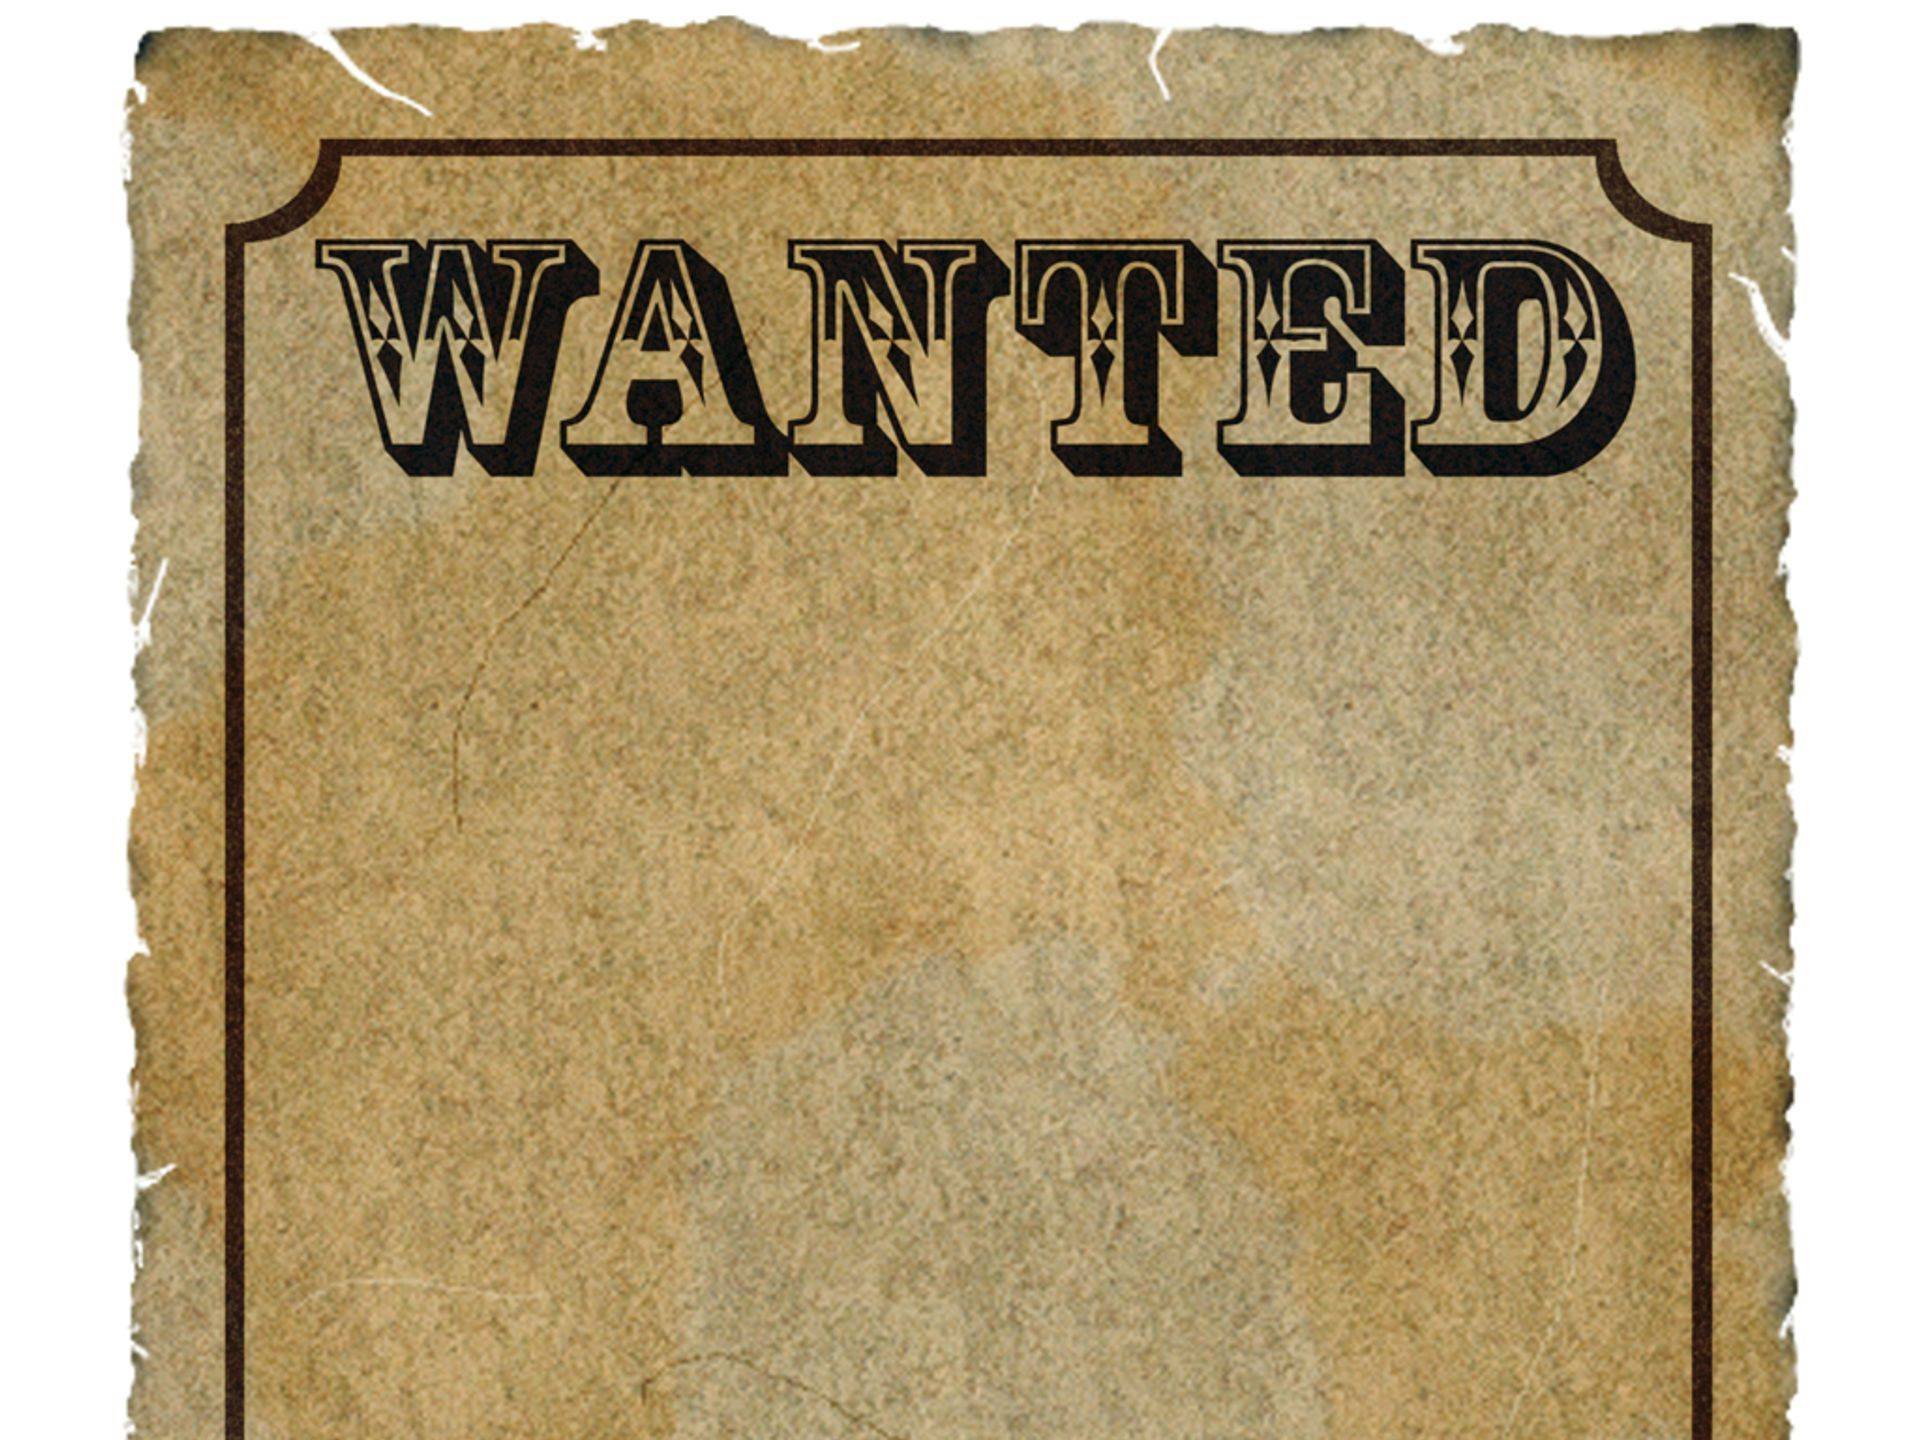 Wanted demo. Wanted плакат. Плакат розыска. Плакат разыскивается. Wanted листовка.